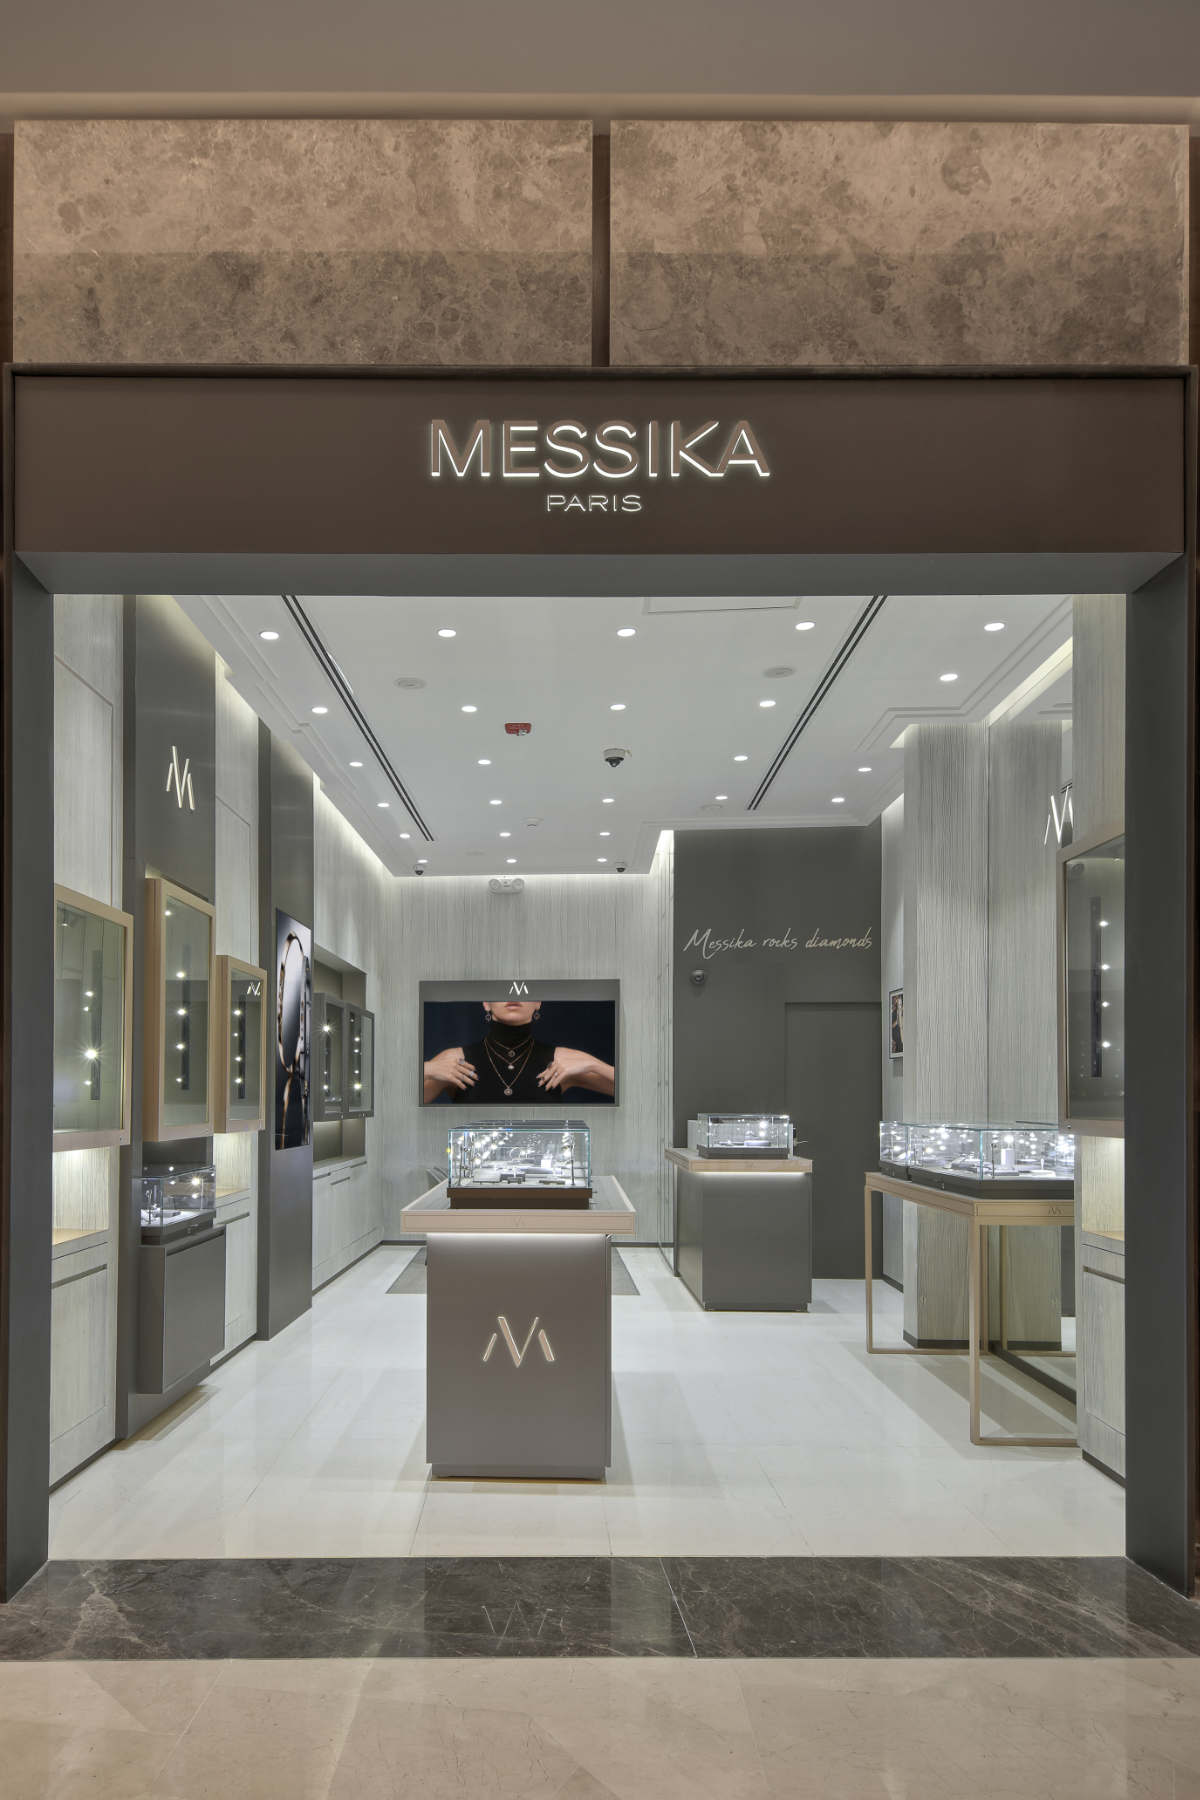 Messika Boutique Opening - Mexico City Santa Fe